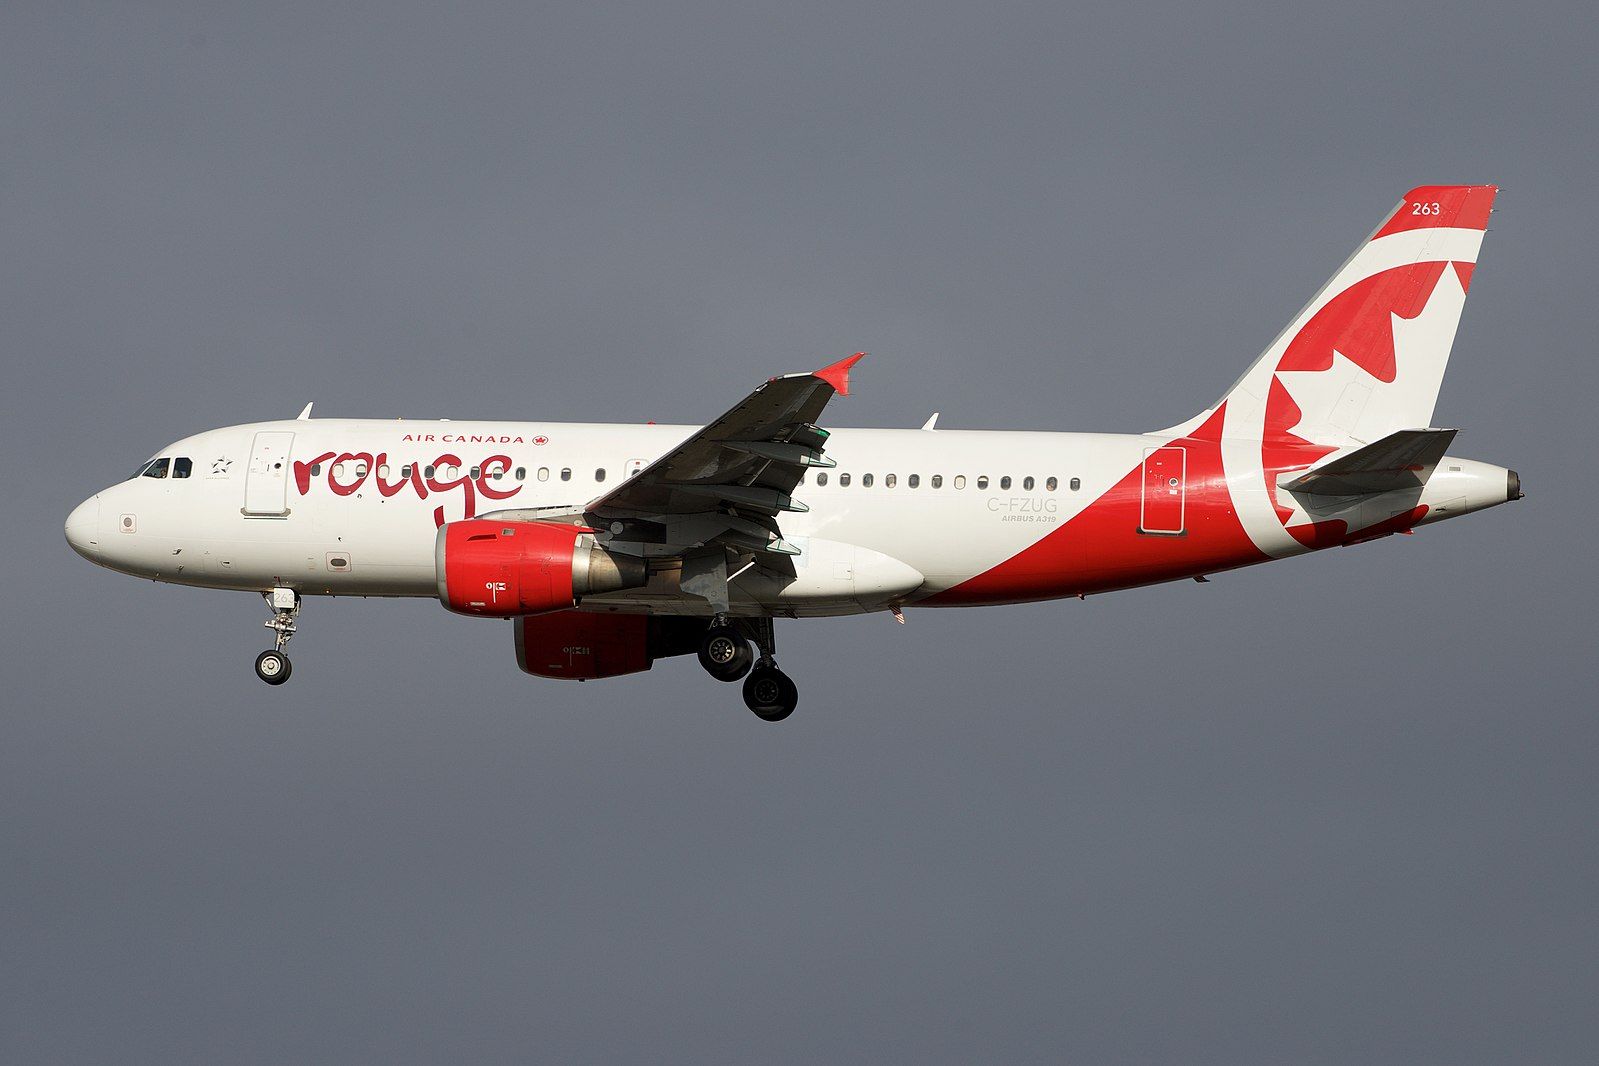 1599px-Air_Canada_Rouge_Airbus_A319_C-FZUG_(23865541110)